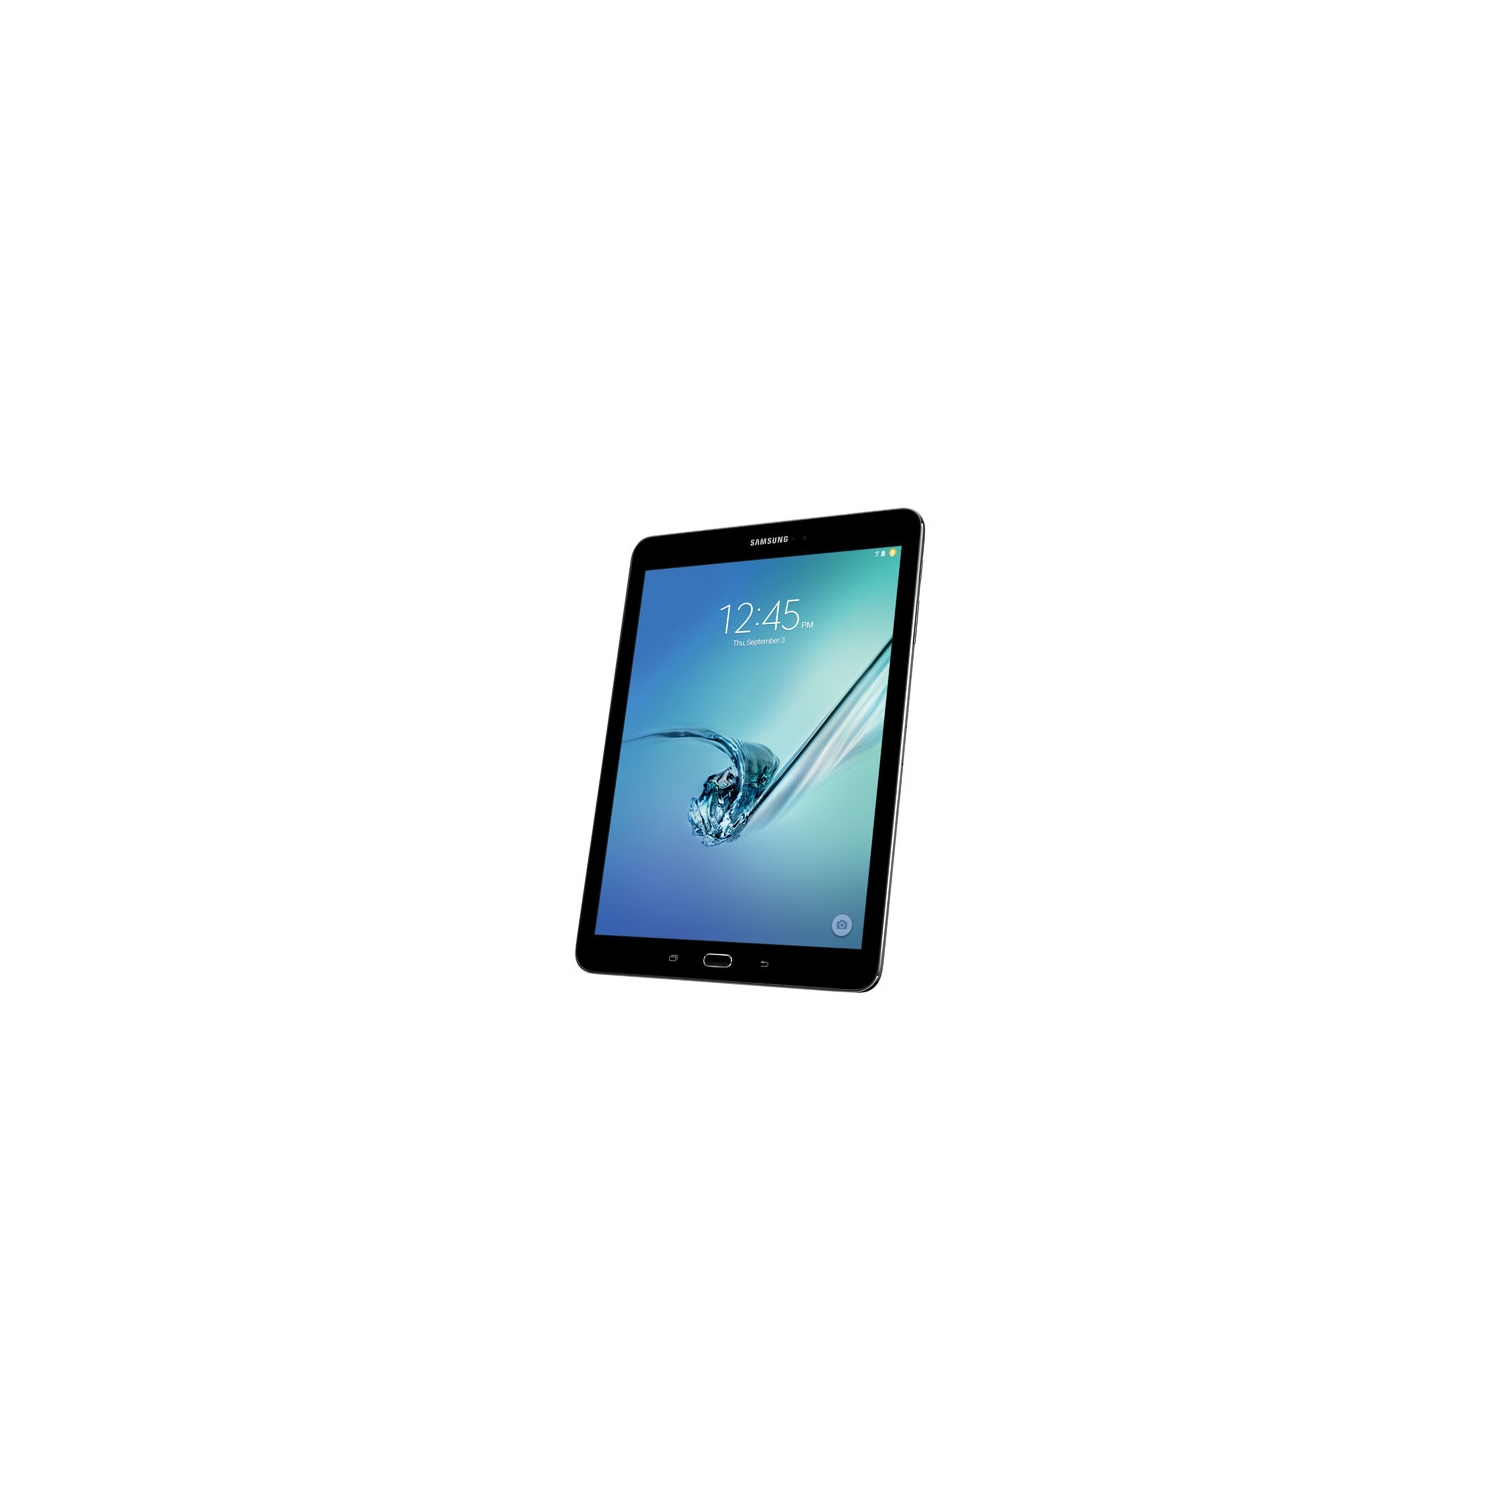 Samsung Galaxy Tab S2 9.7" 32GB Android 6.0 Marshmallow Tablet - Black - Open Box